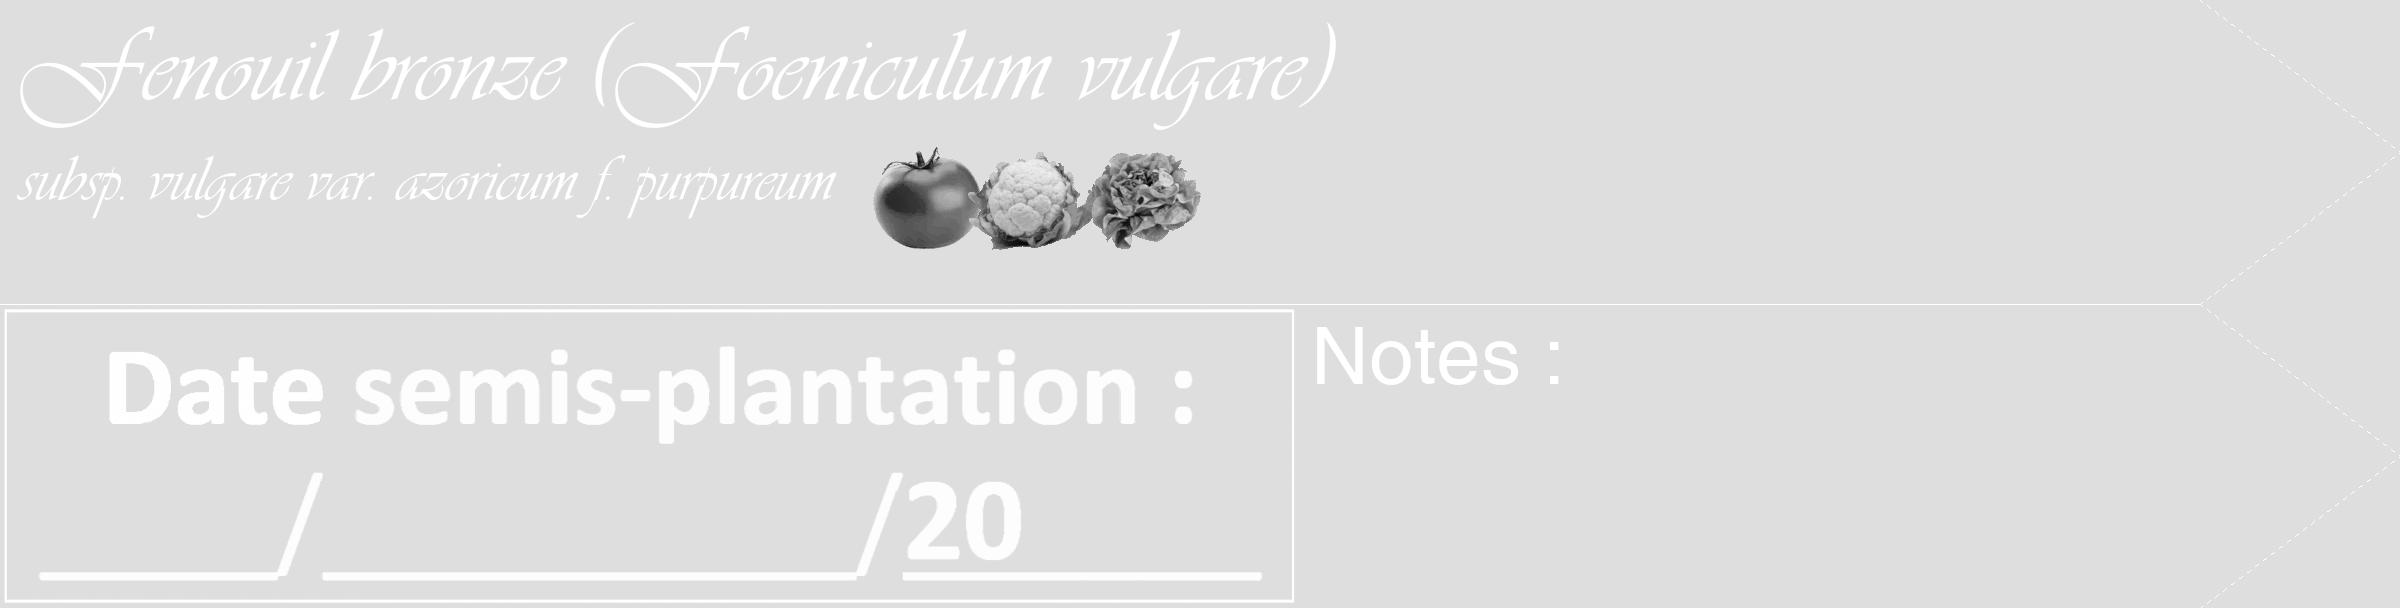 Étiquette de : Foeniculum vulgare subsp. vulgare var. azoricum f. purpureum - format c - style blanche20_simple_simpleviv avec comestibilité simplifiée